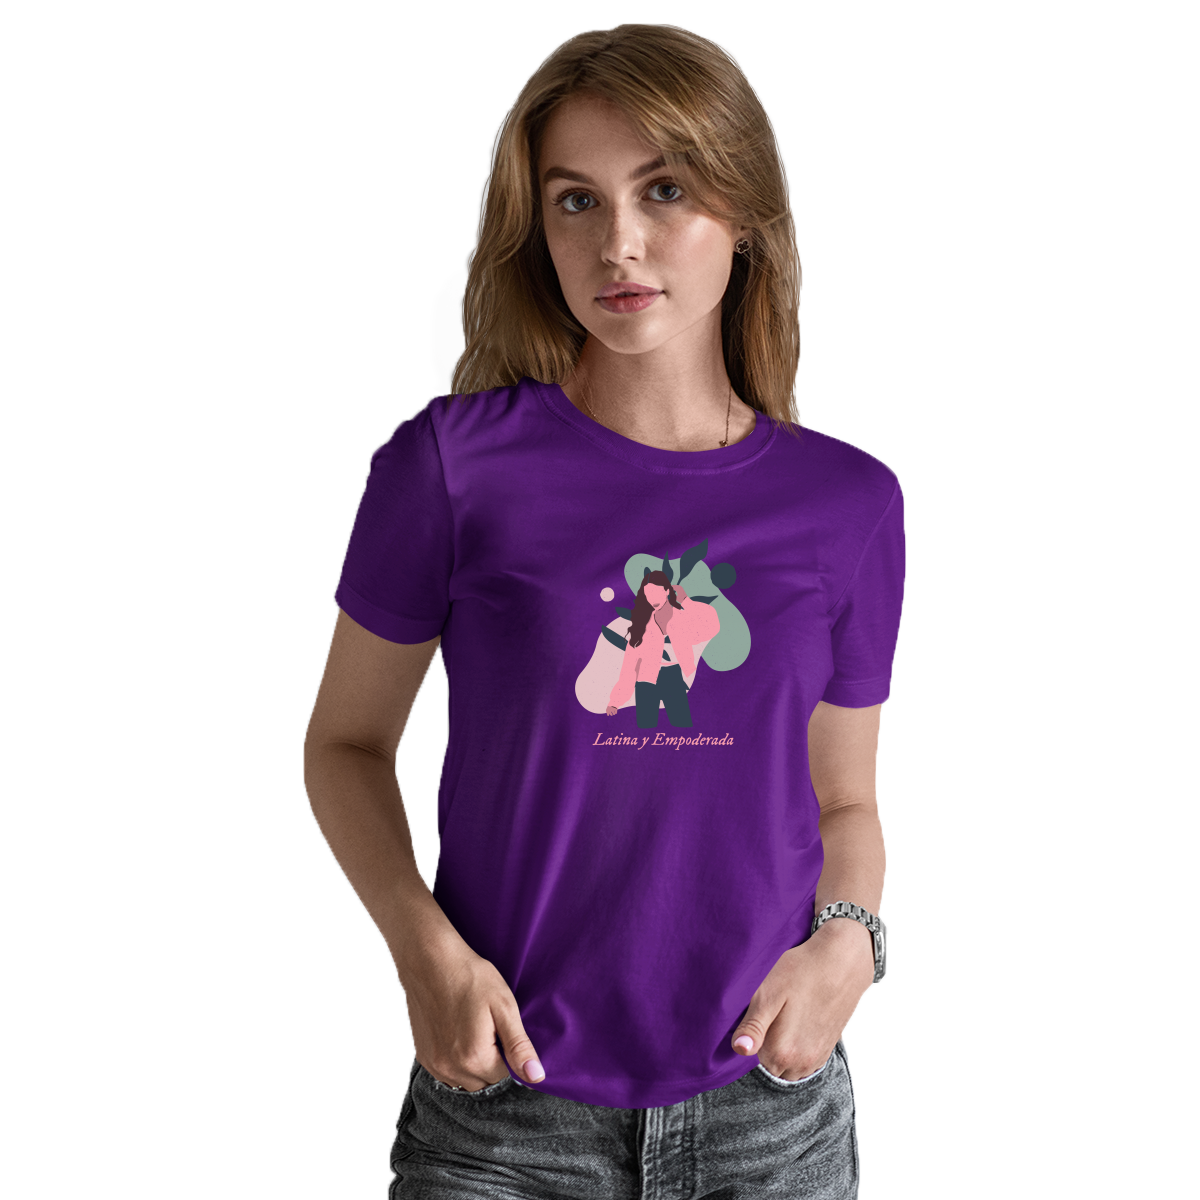 Latina y Empoderada  Women's T-shirt | Purple